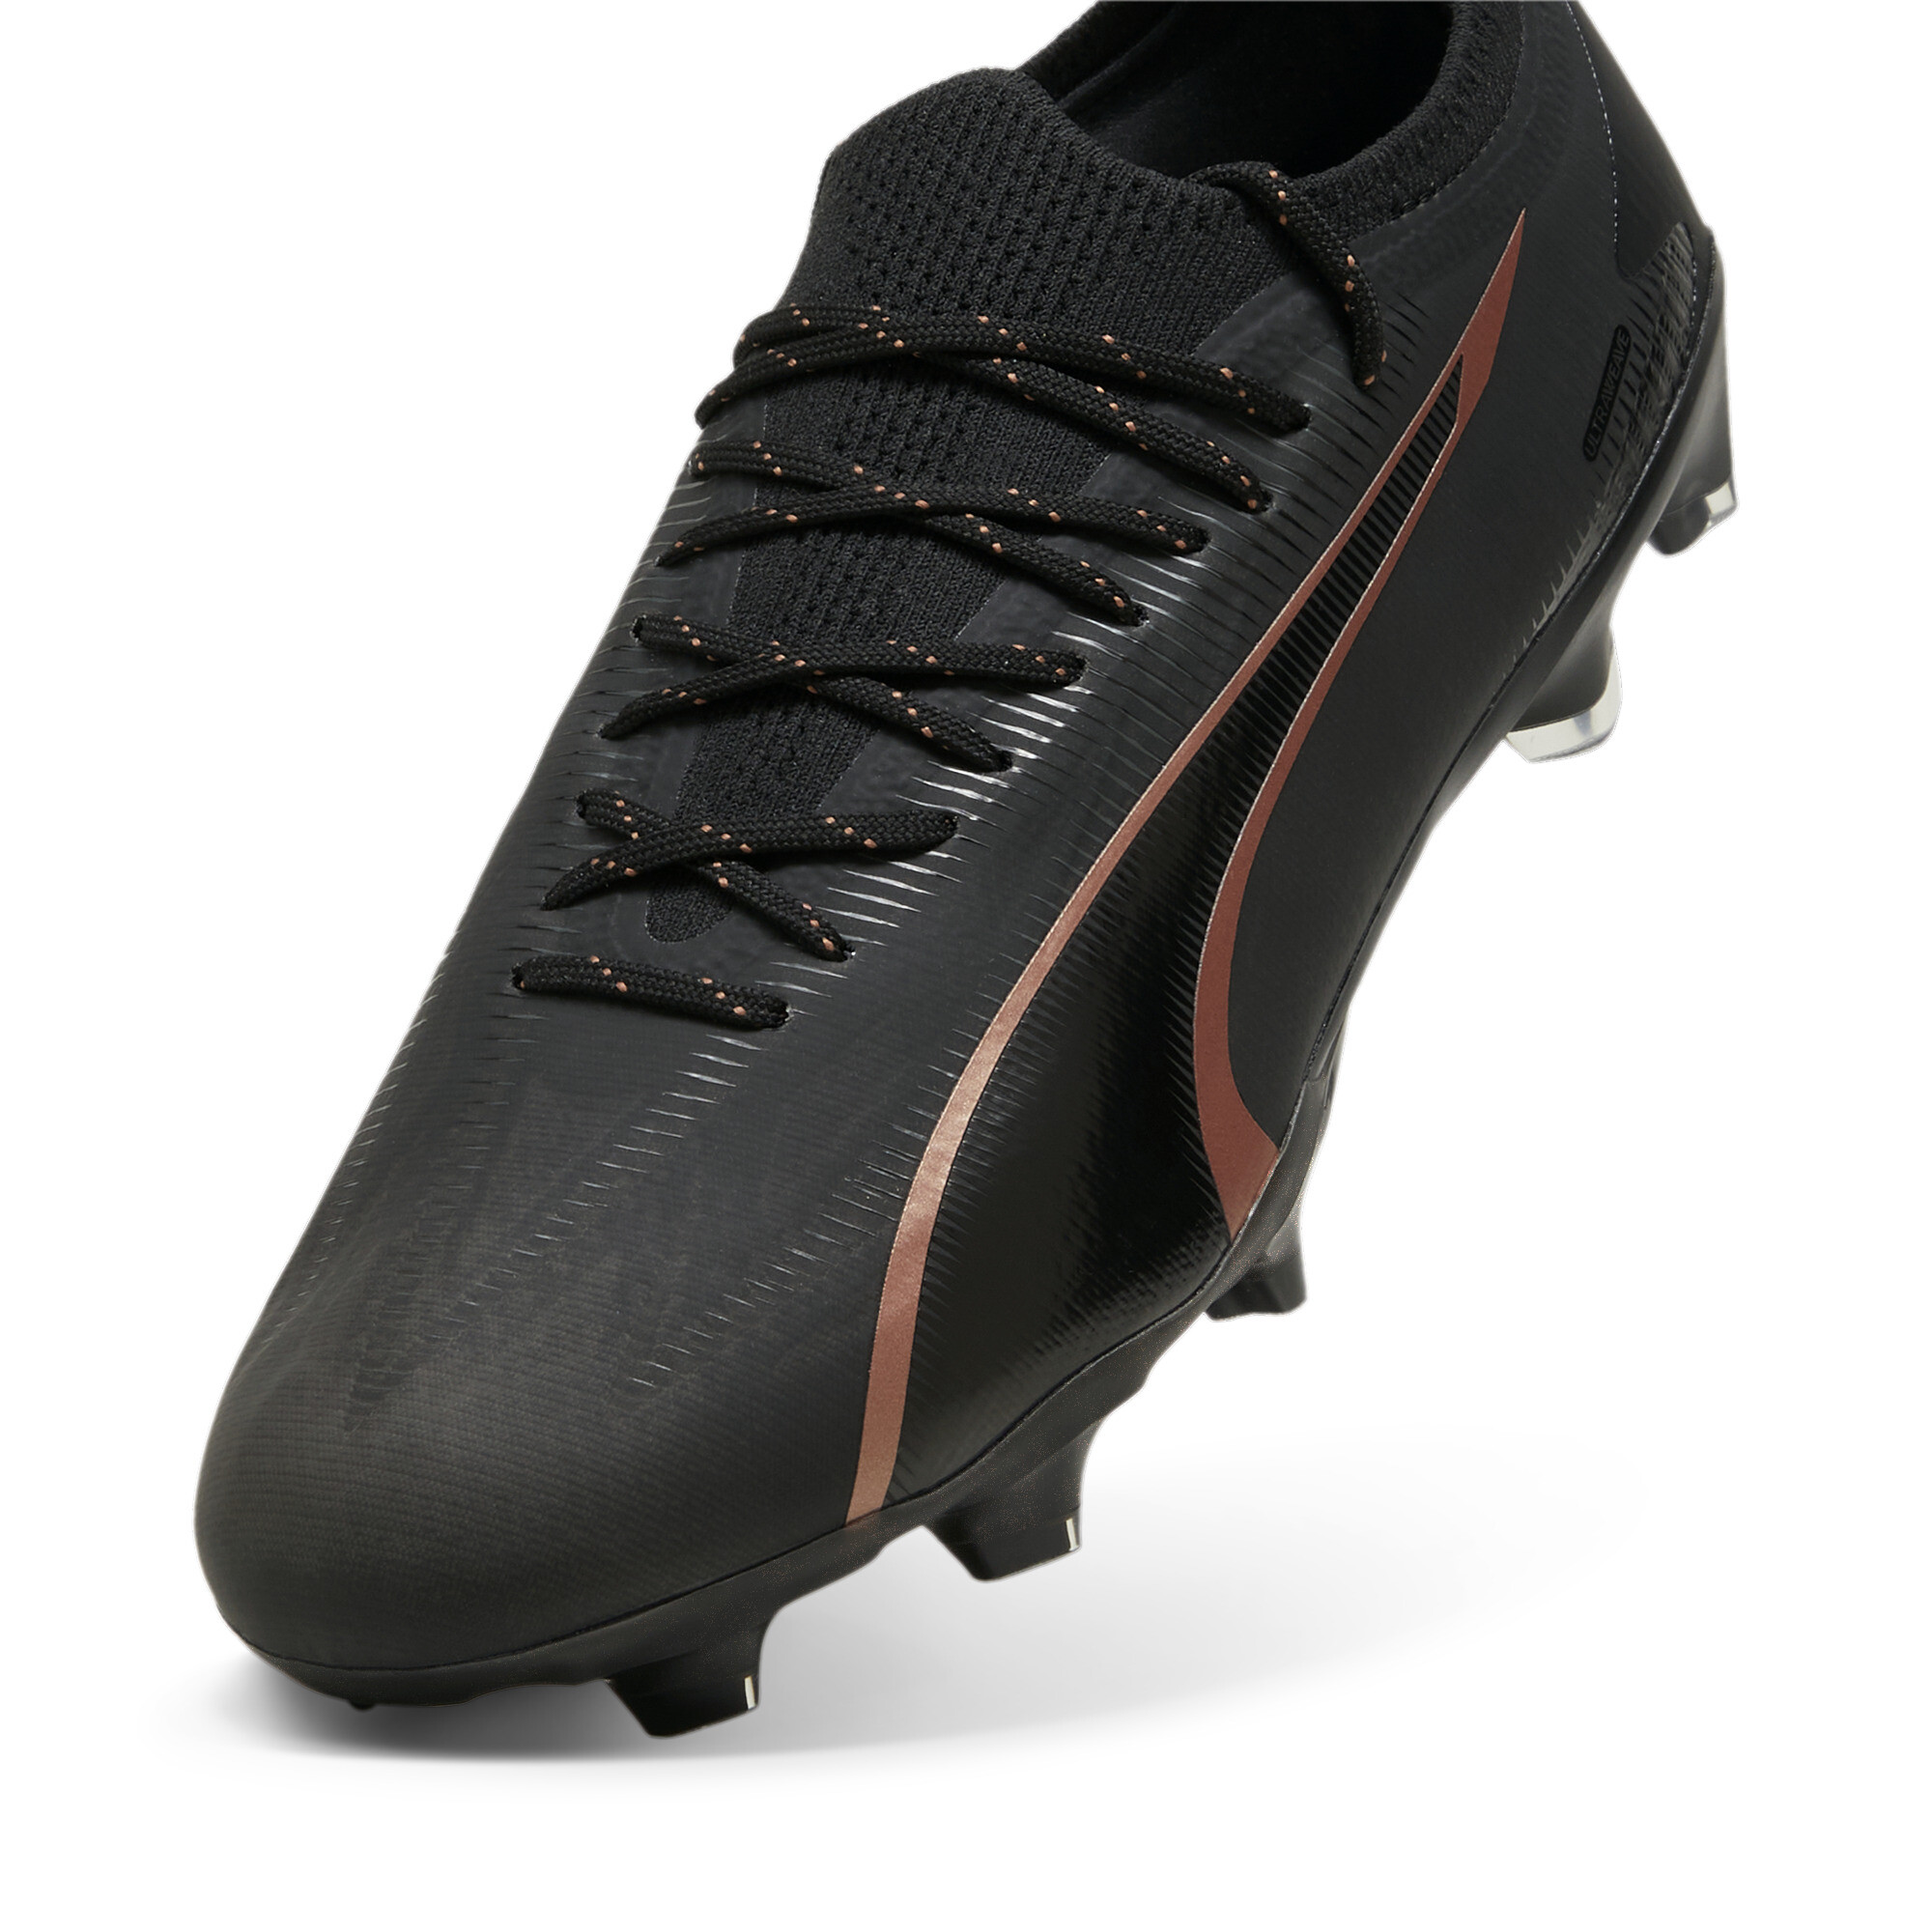 Men's PUMA ULTRA ULTIMATE FG/AG Football Boots In Black, Size EU 43